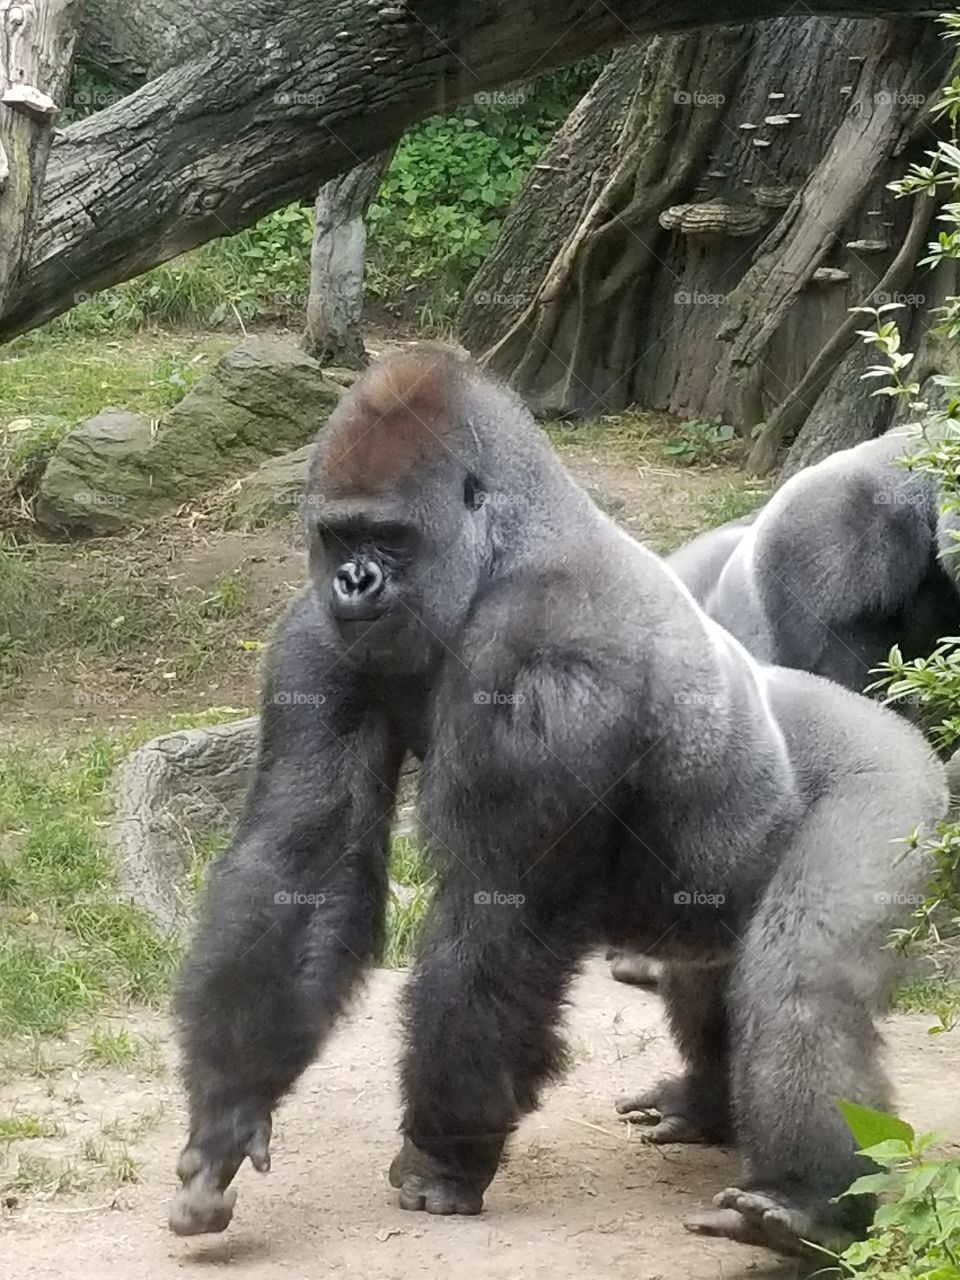 Bronx zoo love the gorillas